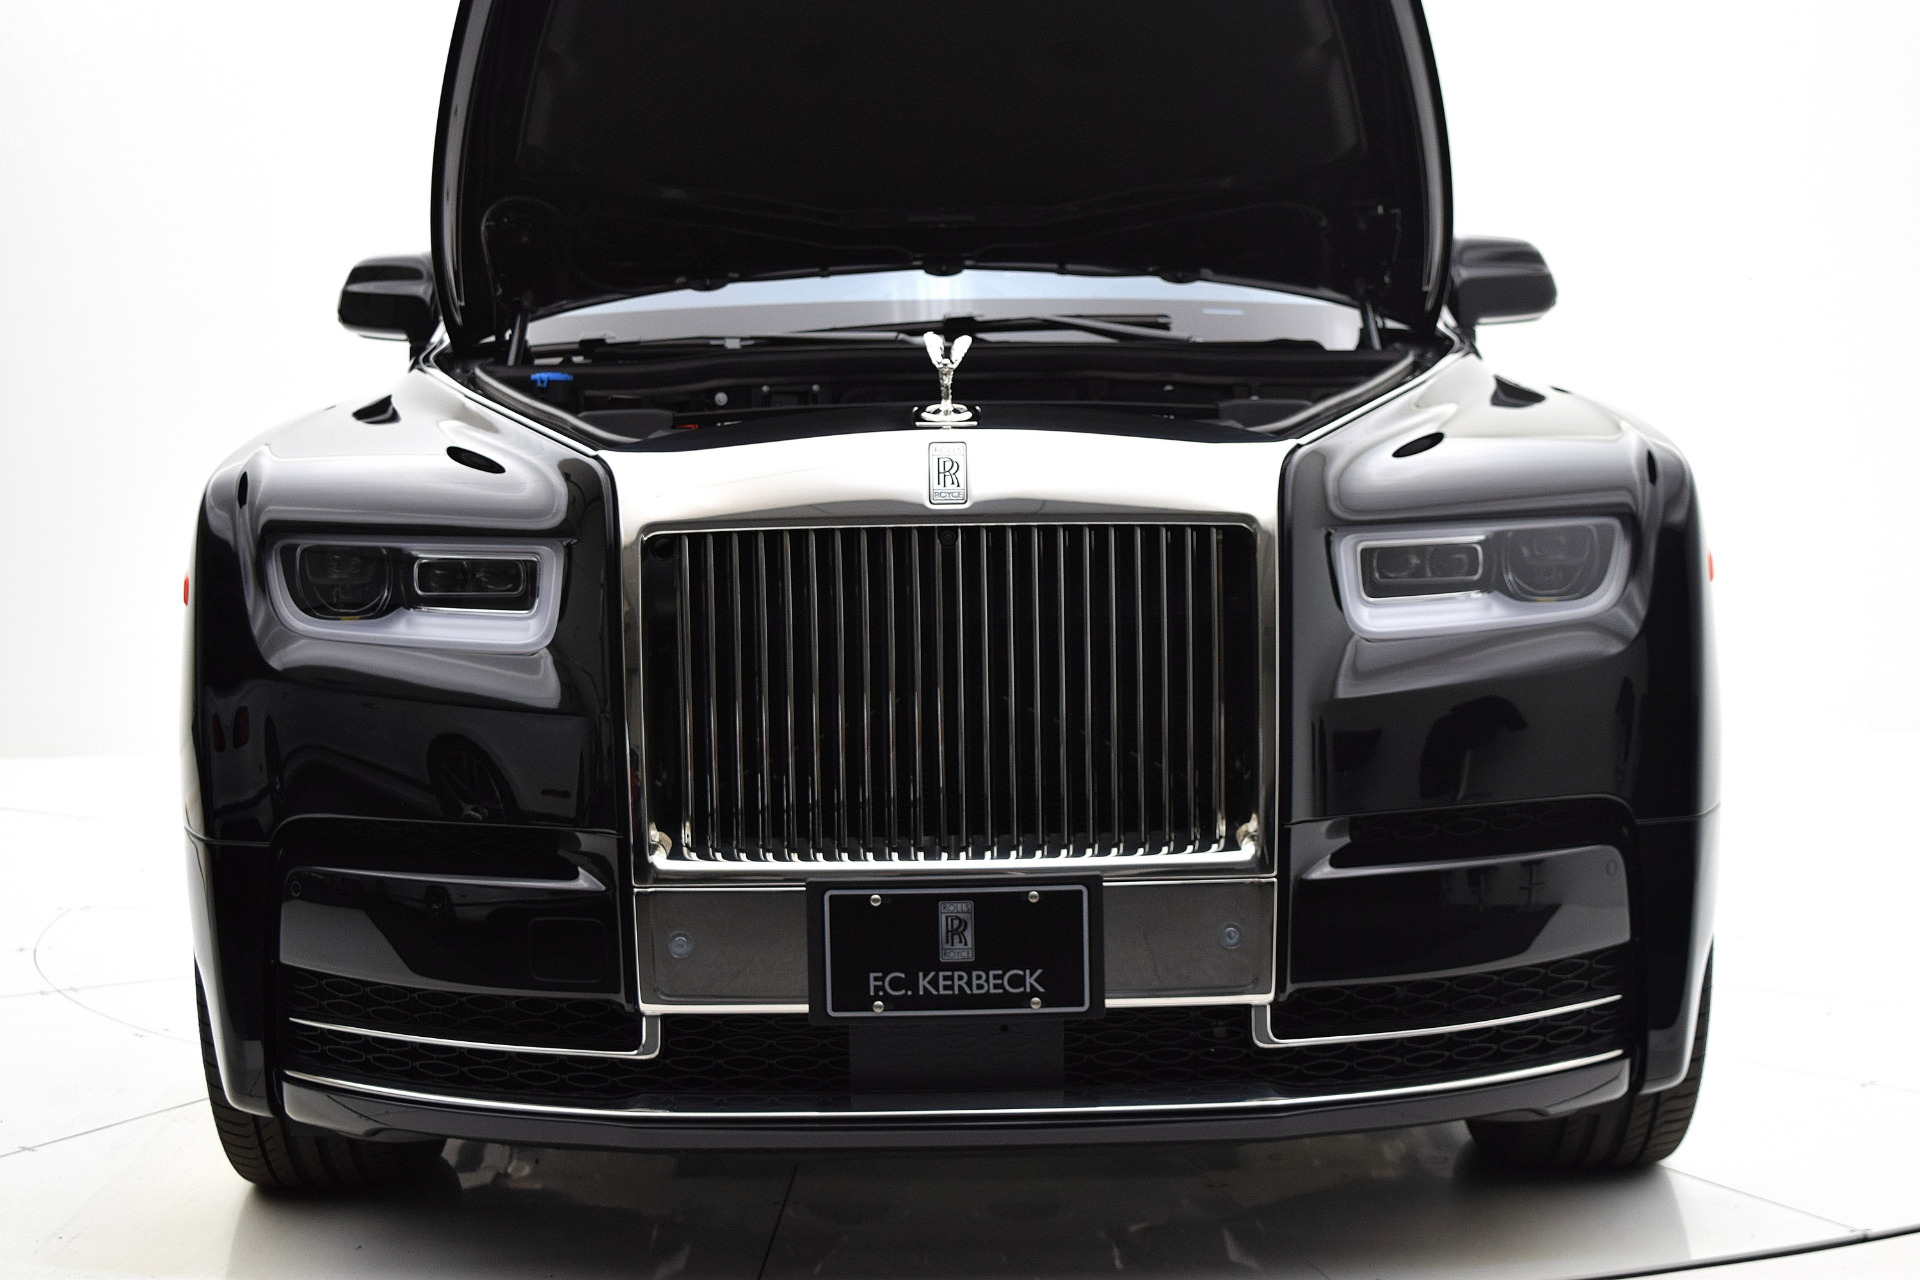 Used 2019 Rolls-Royce Phantom For Sale ($375,000)  Rolls-Royce Motor Cars  Philadelphia Stock #19R101